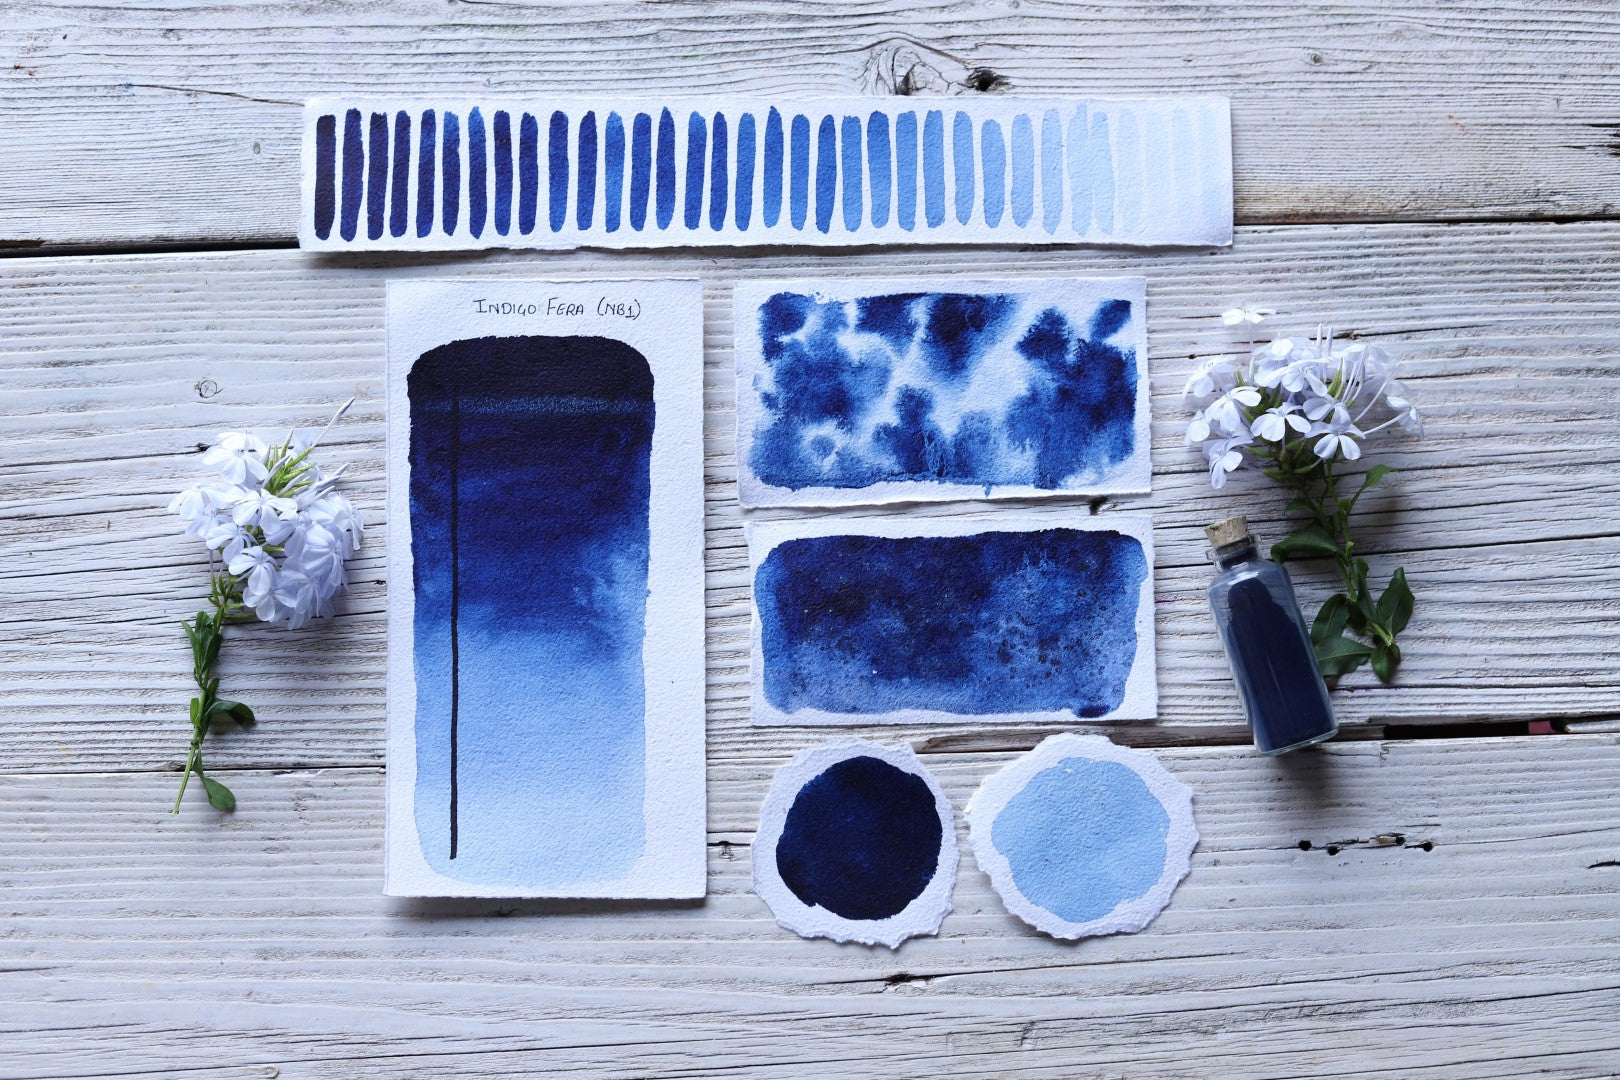 blue-pine-arts-premium-art-supplies-handmade-artisanal-watercolor-paints-professional-watercolors-handcrafted-indigo-fera-6105.jpg